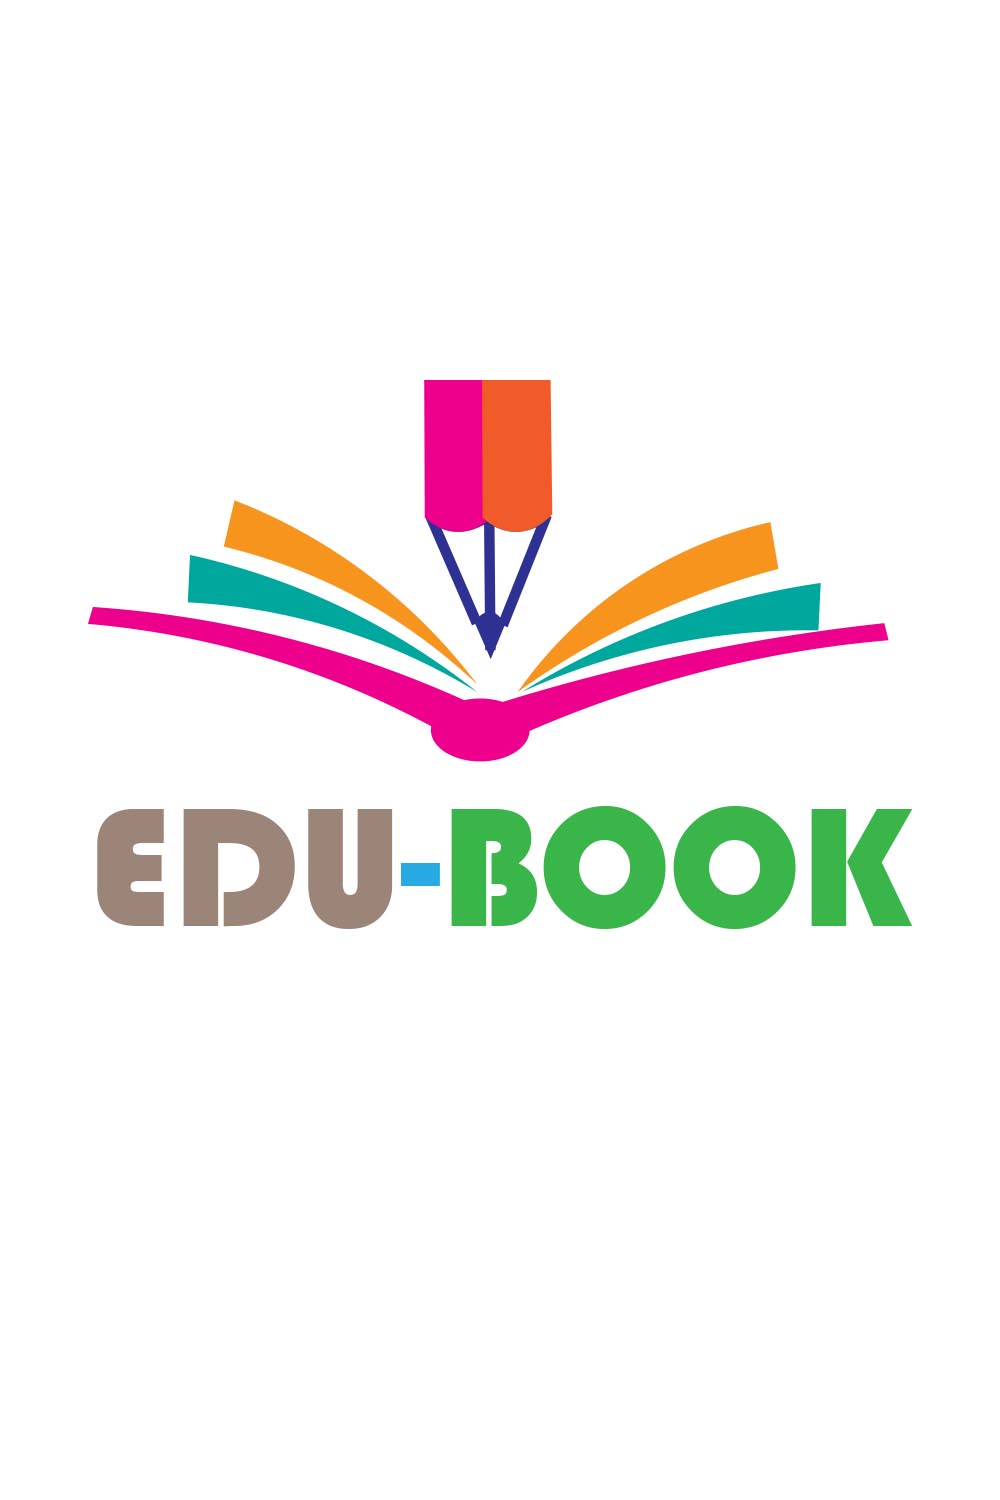 Education logo pinterest preview image.